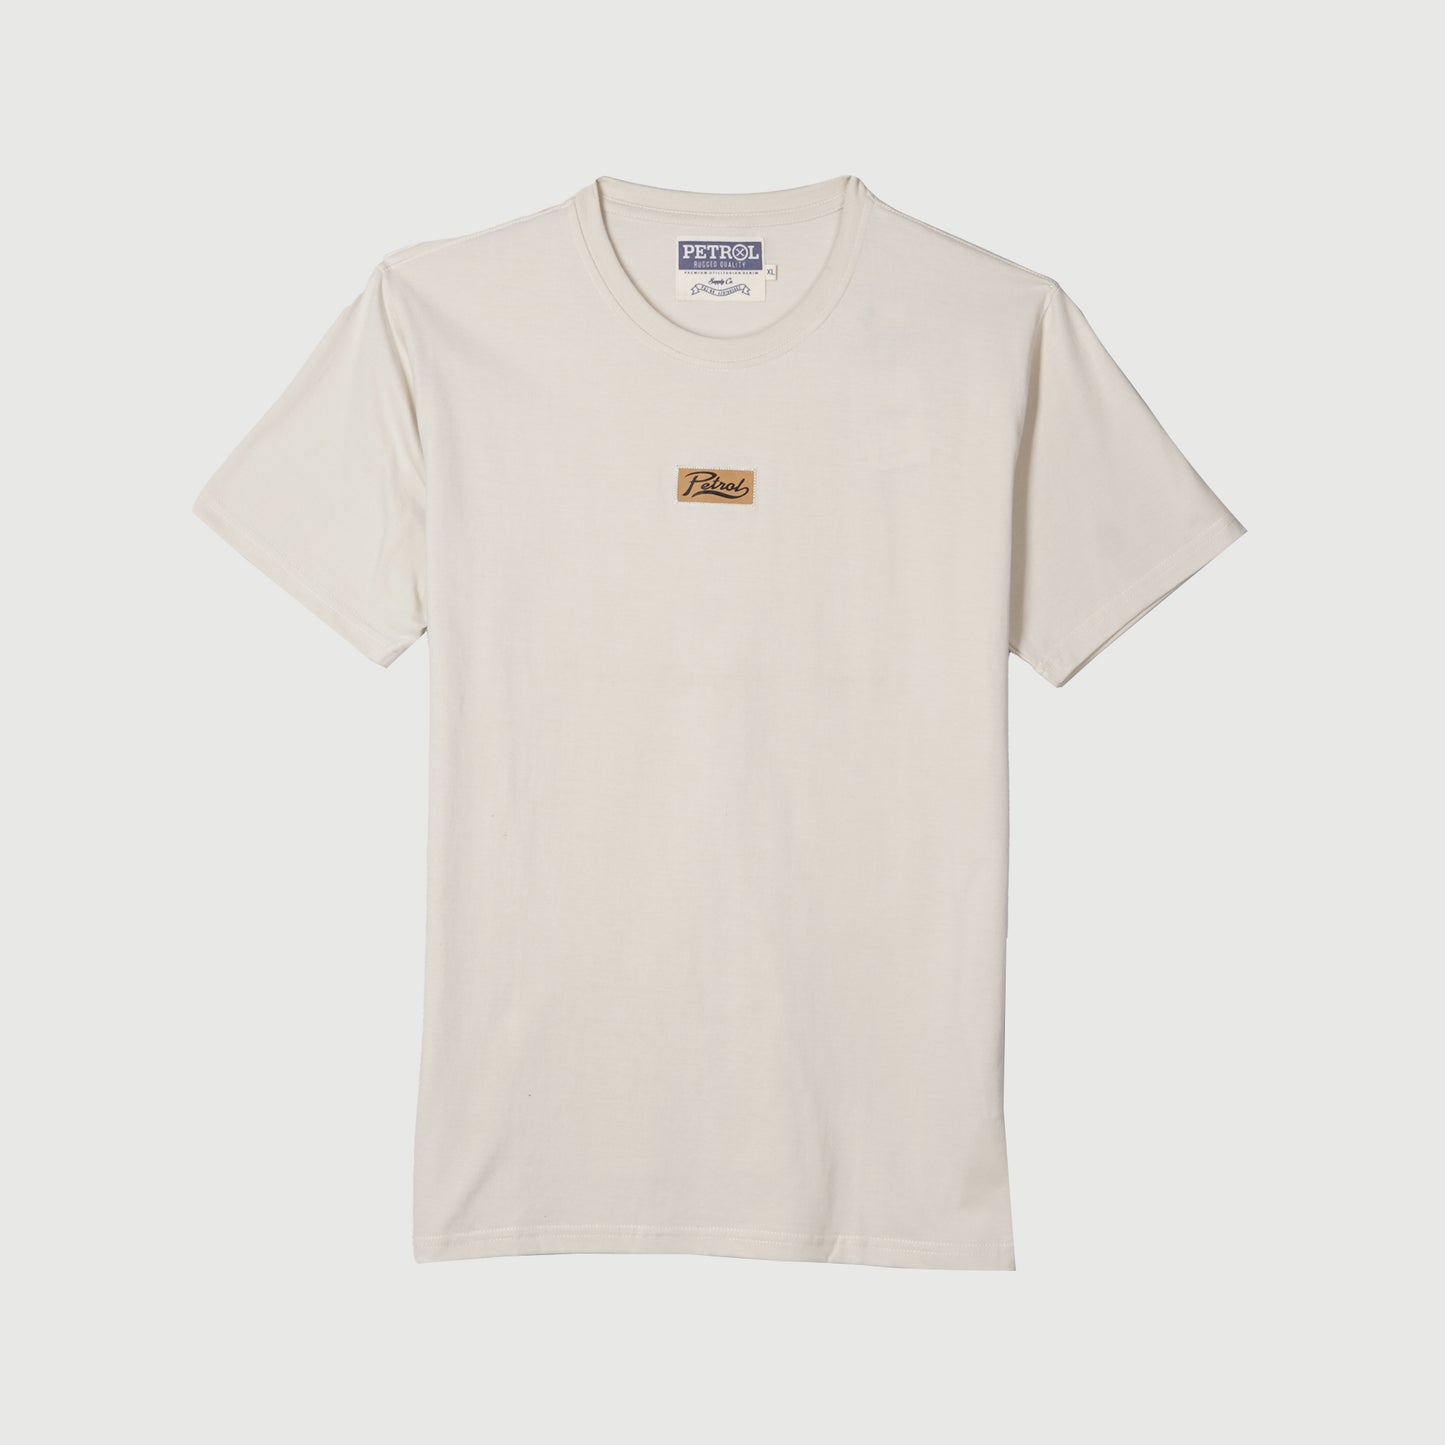 Petrol Basic Tees for Men Slim Fitting Shirt CVC Jersey Fabric Trendy fashion Casual Top Beige T-shirt for Men 146931-U (Beige)